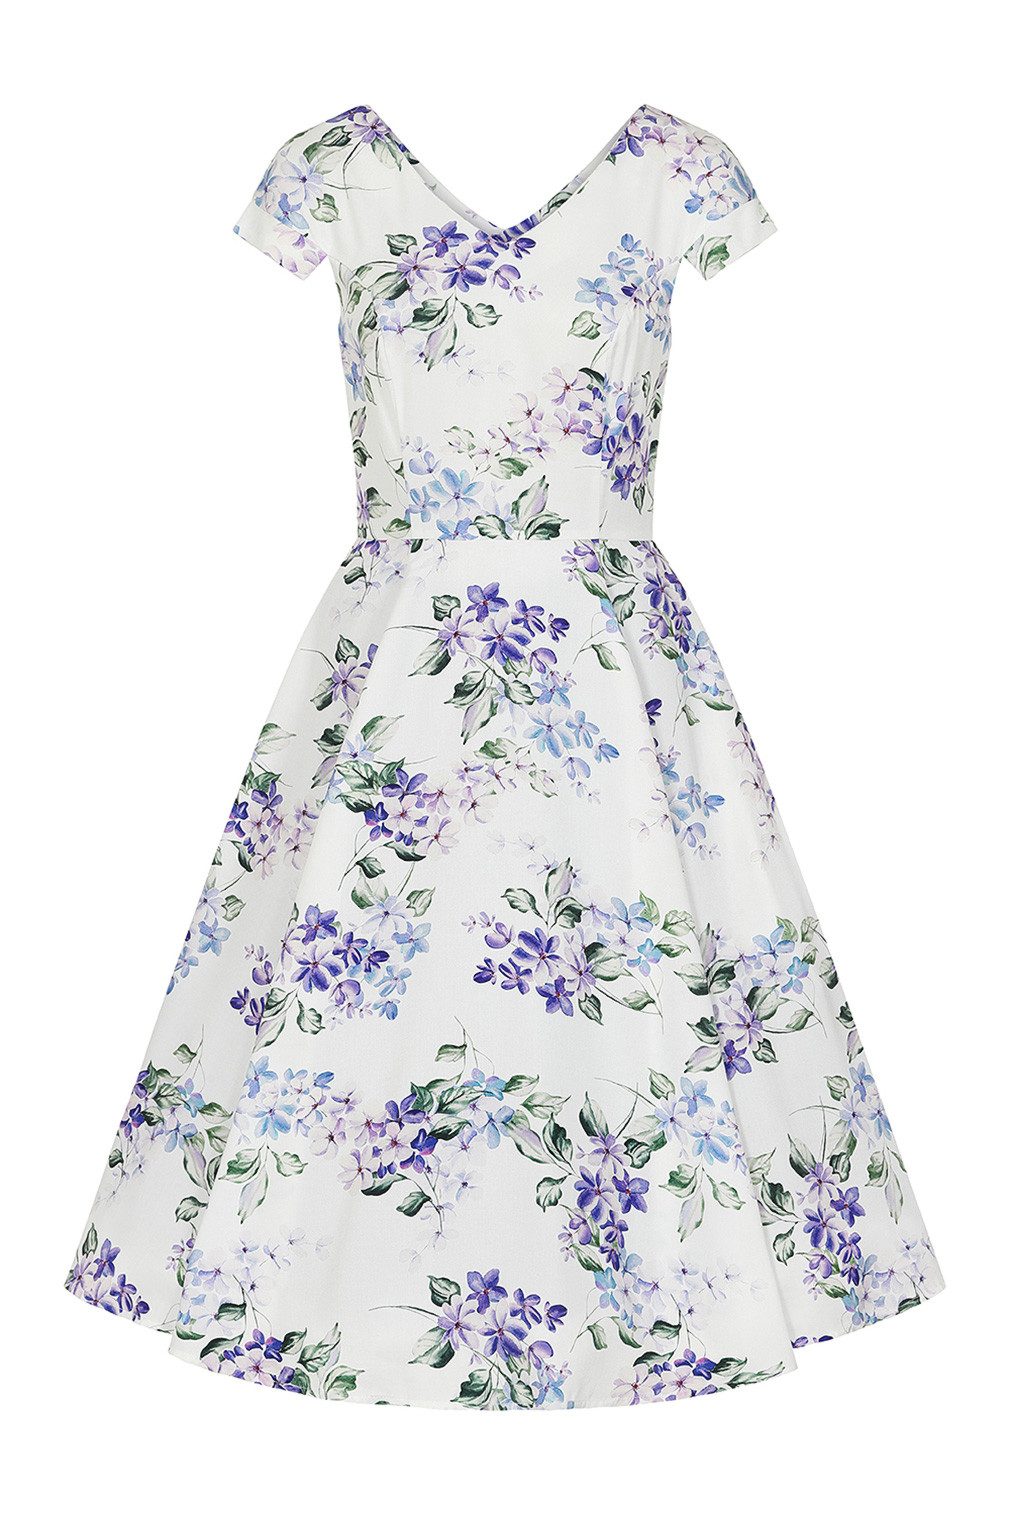 Hearts & Roses London A-Linien-Kleid Lucie Floral Swing Dress Rockabella Vintage Retro